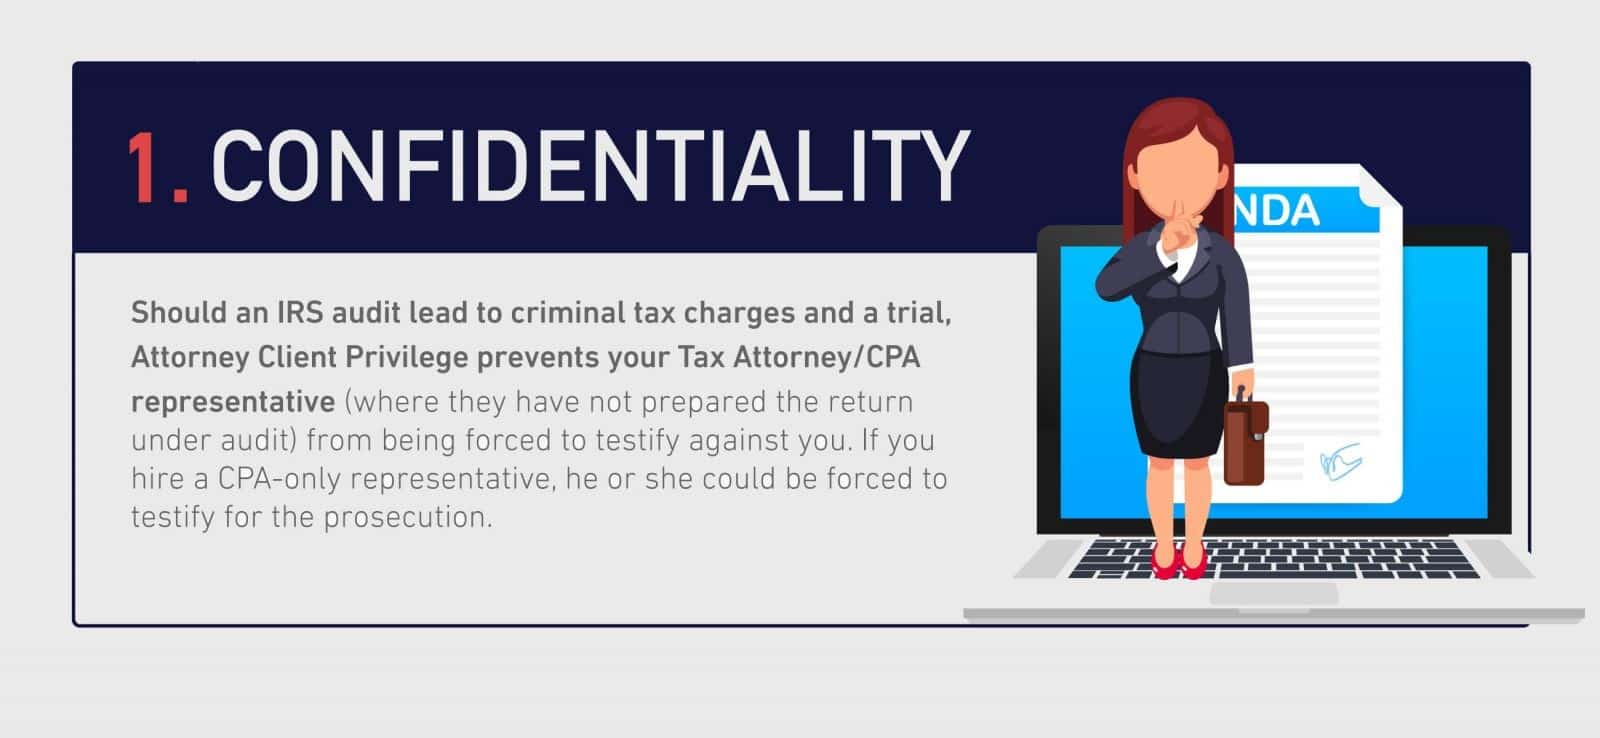 Confidentiality-klasing-associates-irs-tax-audit-attorneys